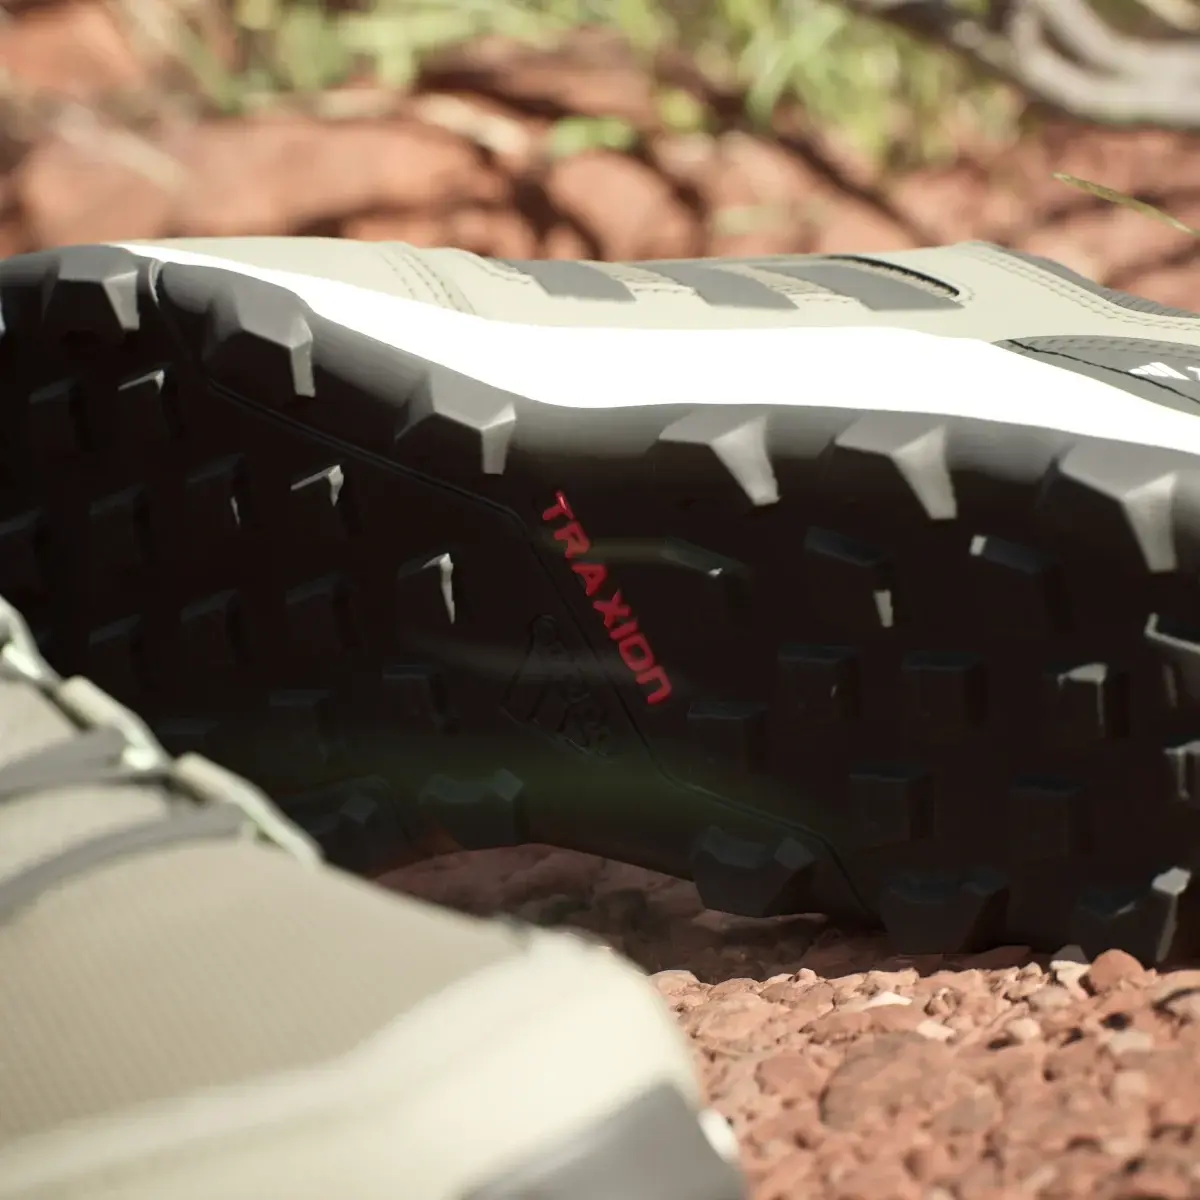 Adidas Chaussure de trail running Tracerocker 2.0. 2